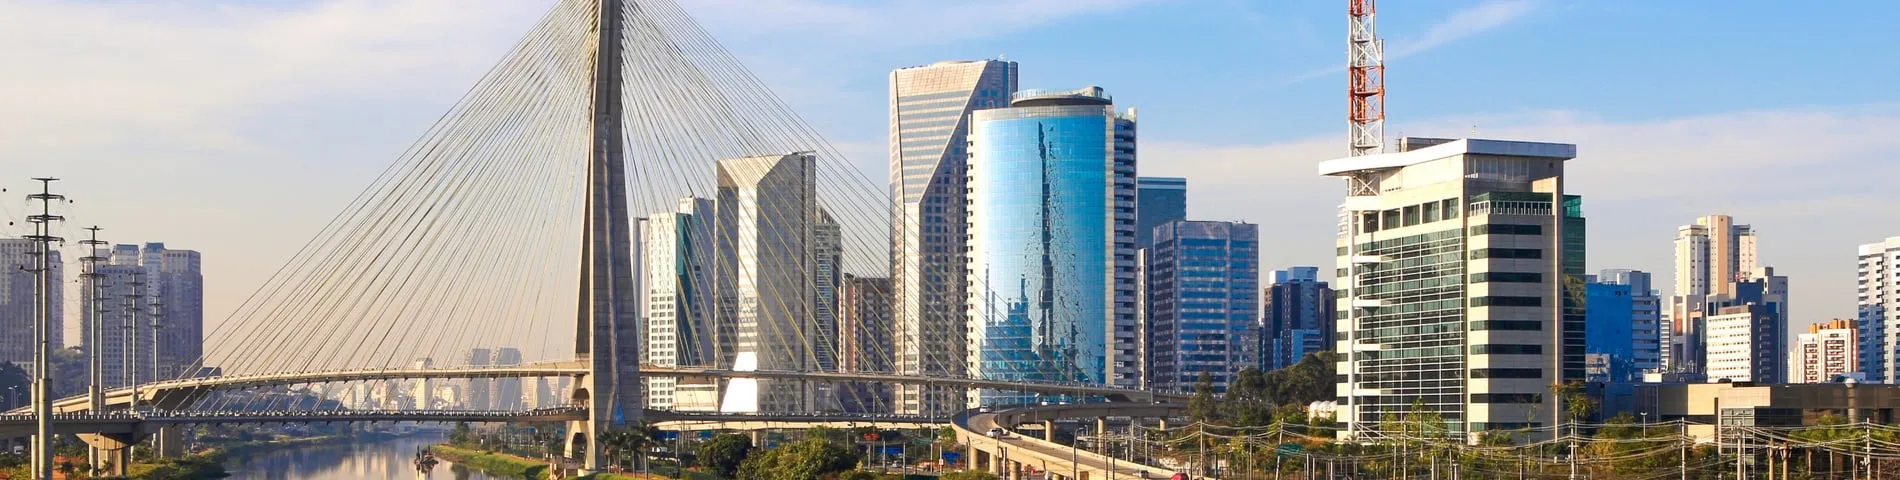 Sao Paulo - Standardowy